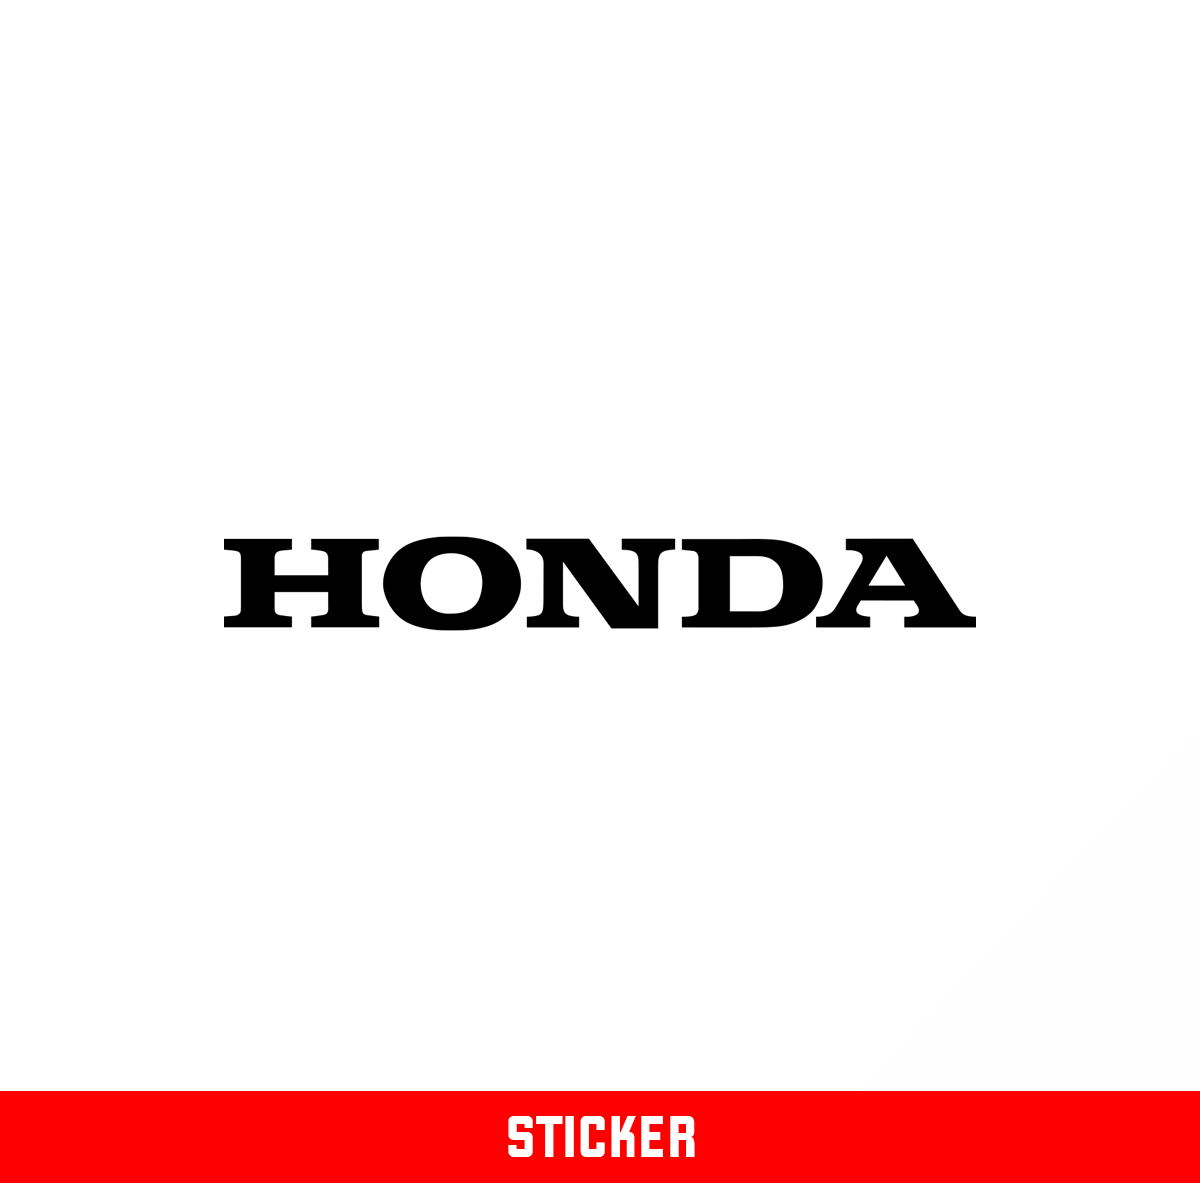 Wings Emblem Sticker for Honda Cars, Metal (4) : Amazon.in: Car & Motorbike